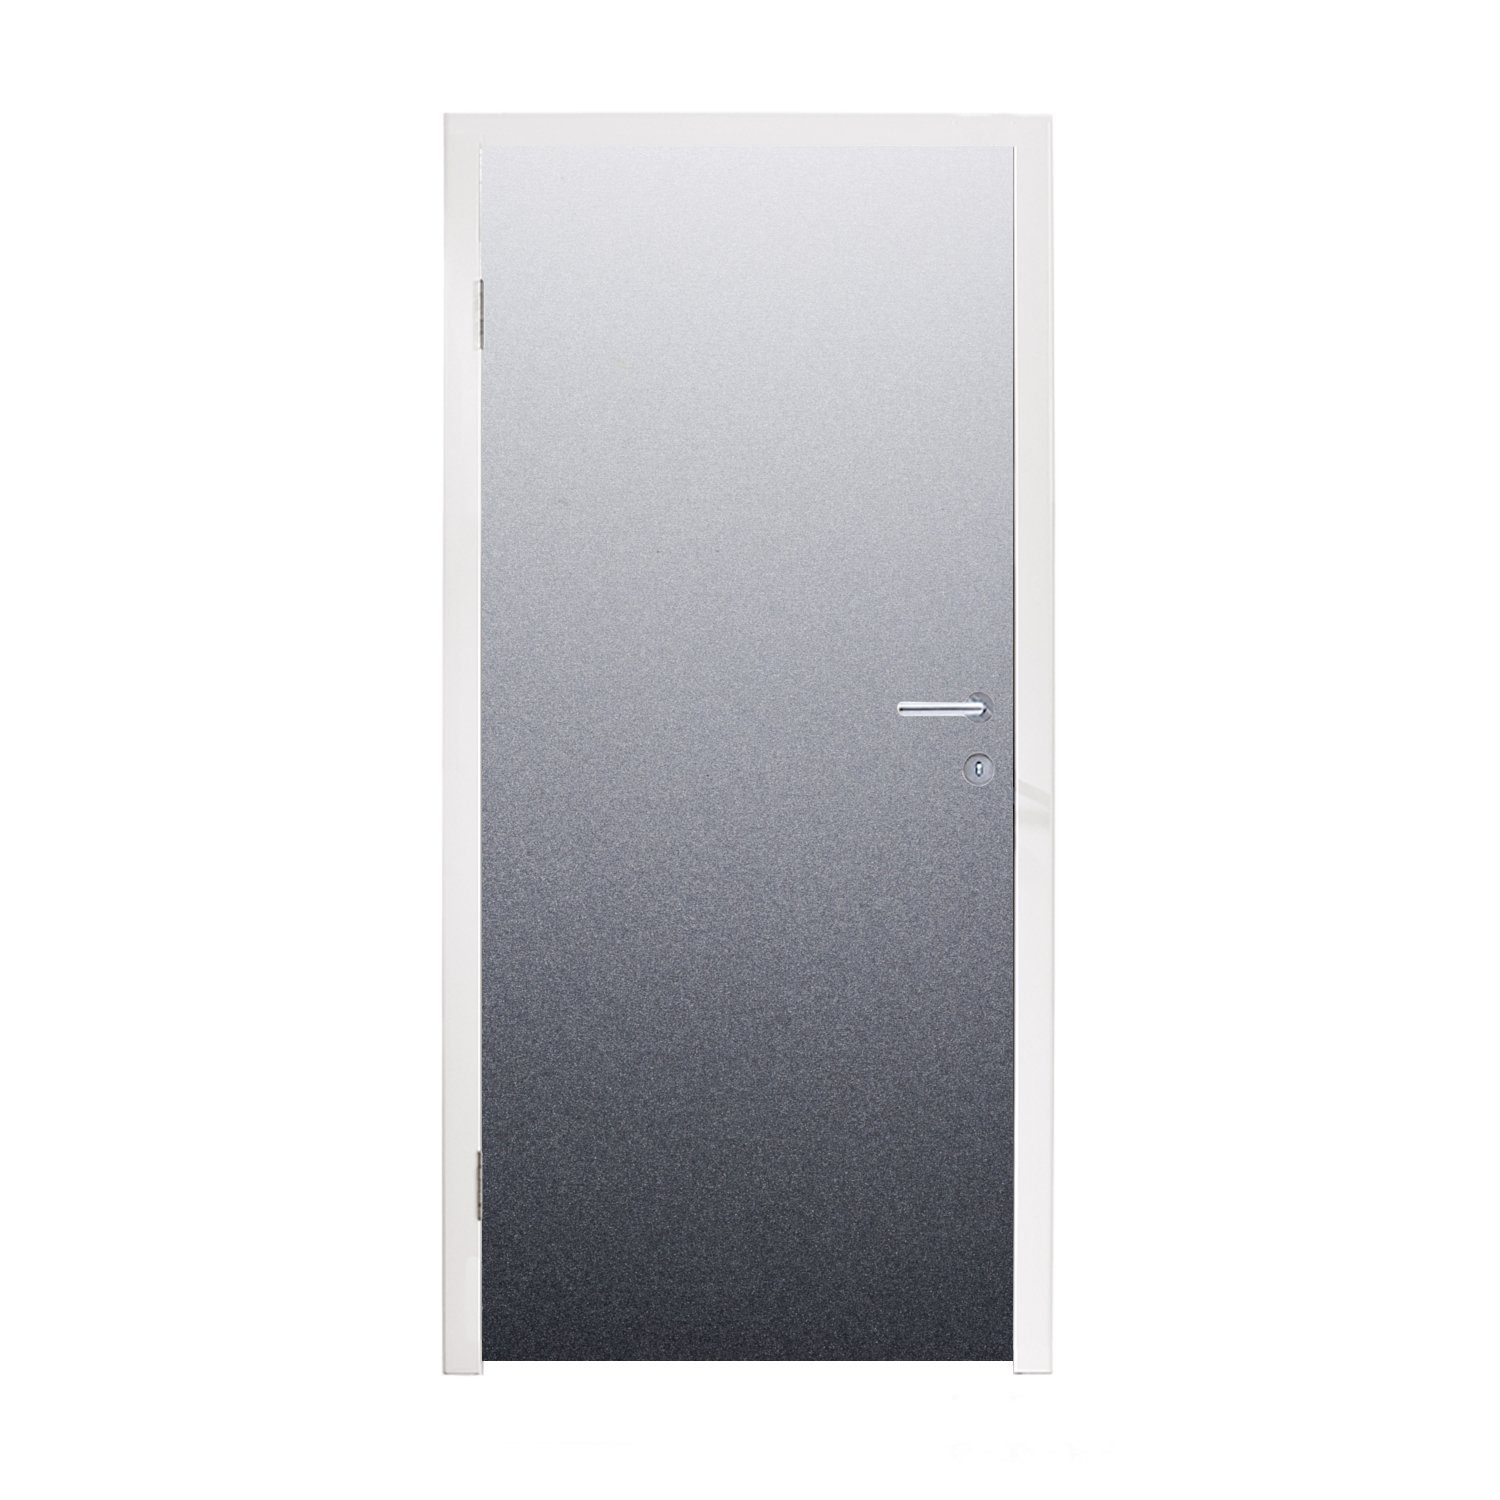 MuchoWow Türtapete Aluminiumdruck - Metall - Grau, Matt, bedruckt, (1 St), Fototapete für Tür, Türaufkleber, 75x205 cm | Türtapeten